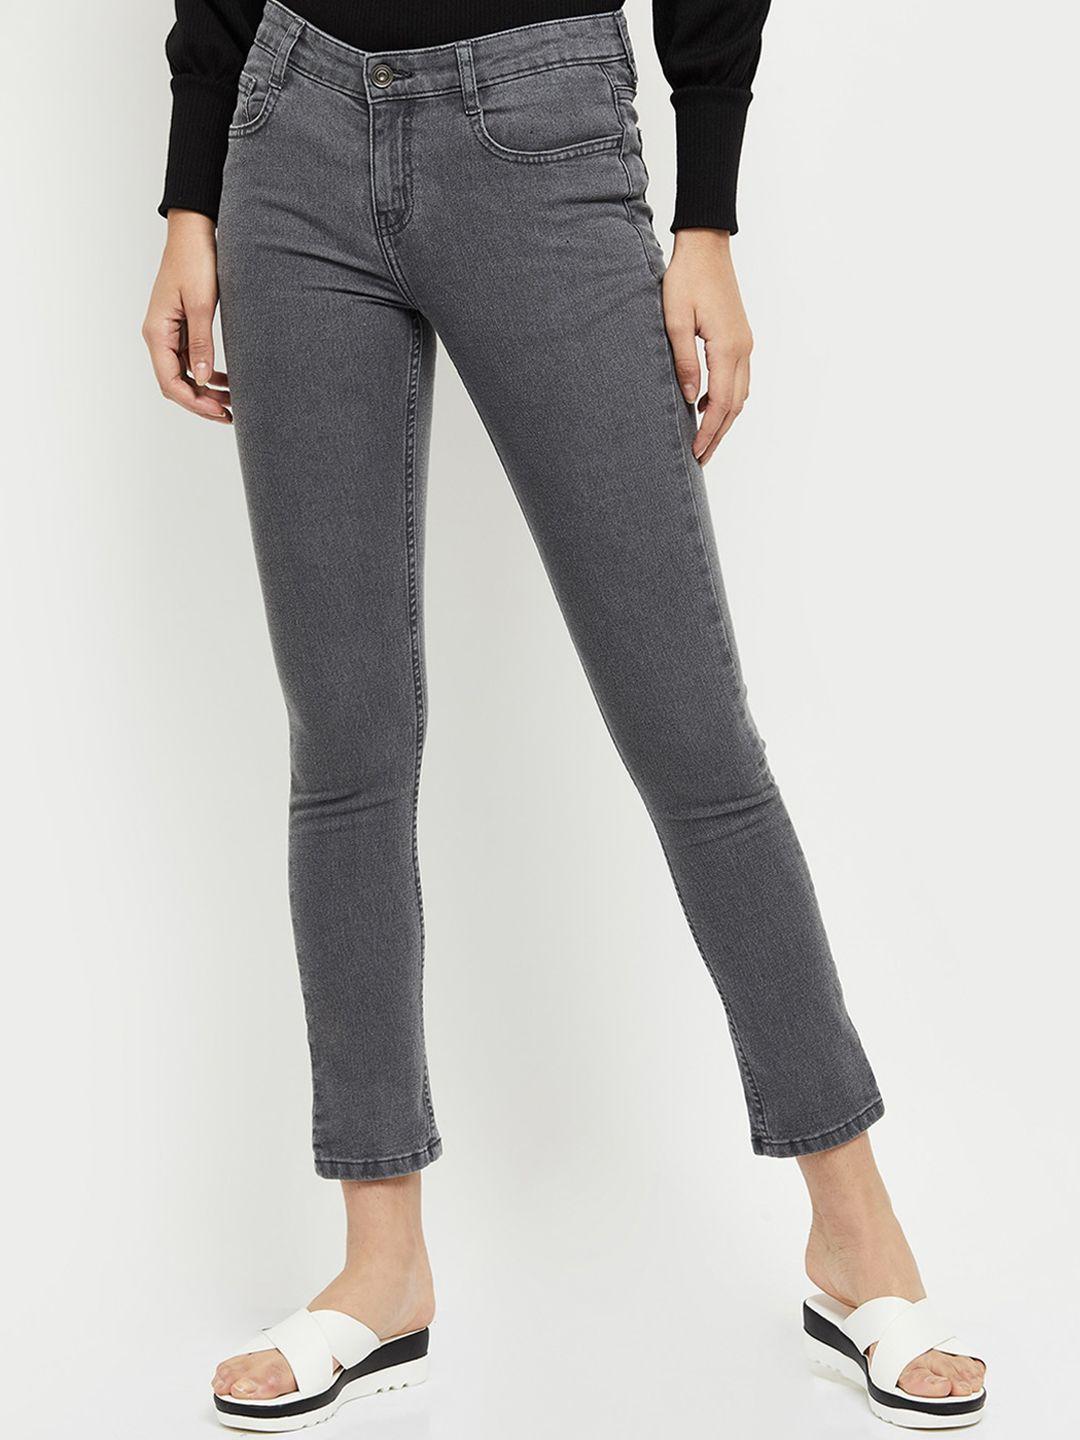 max women grey skinny fit jeans